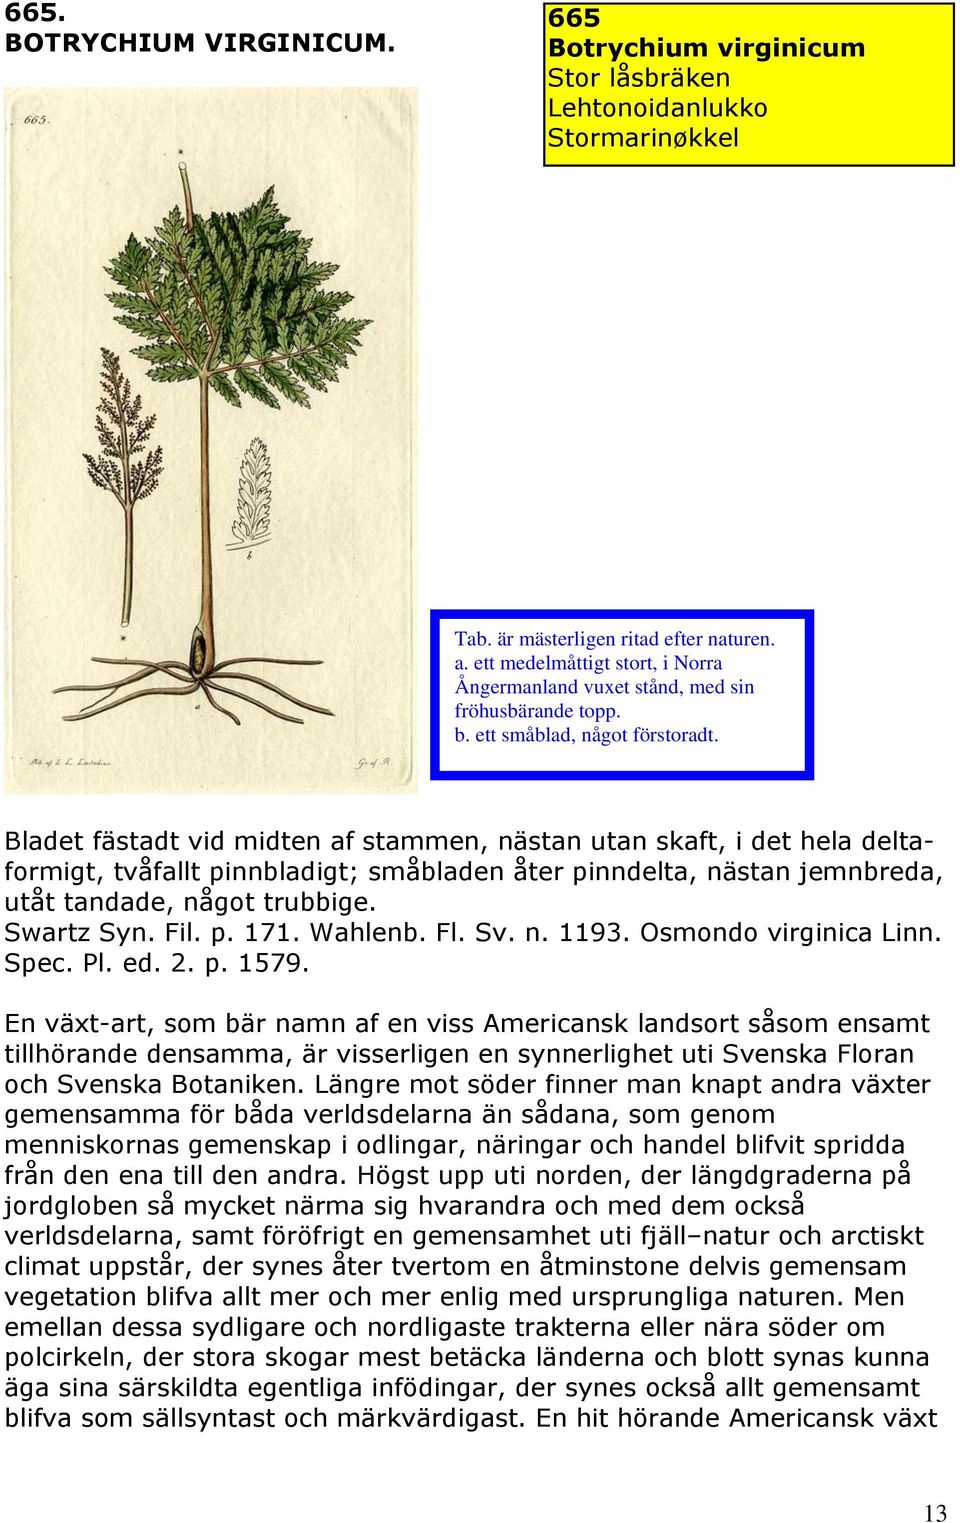 Wahlenb. Fl. Sv. n. 1193. Osmondo virginica Linn. Spec. Pl. ed. 2. p. 1579.